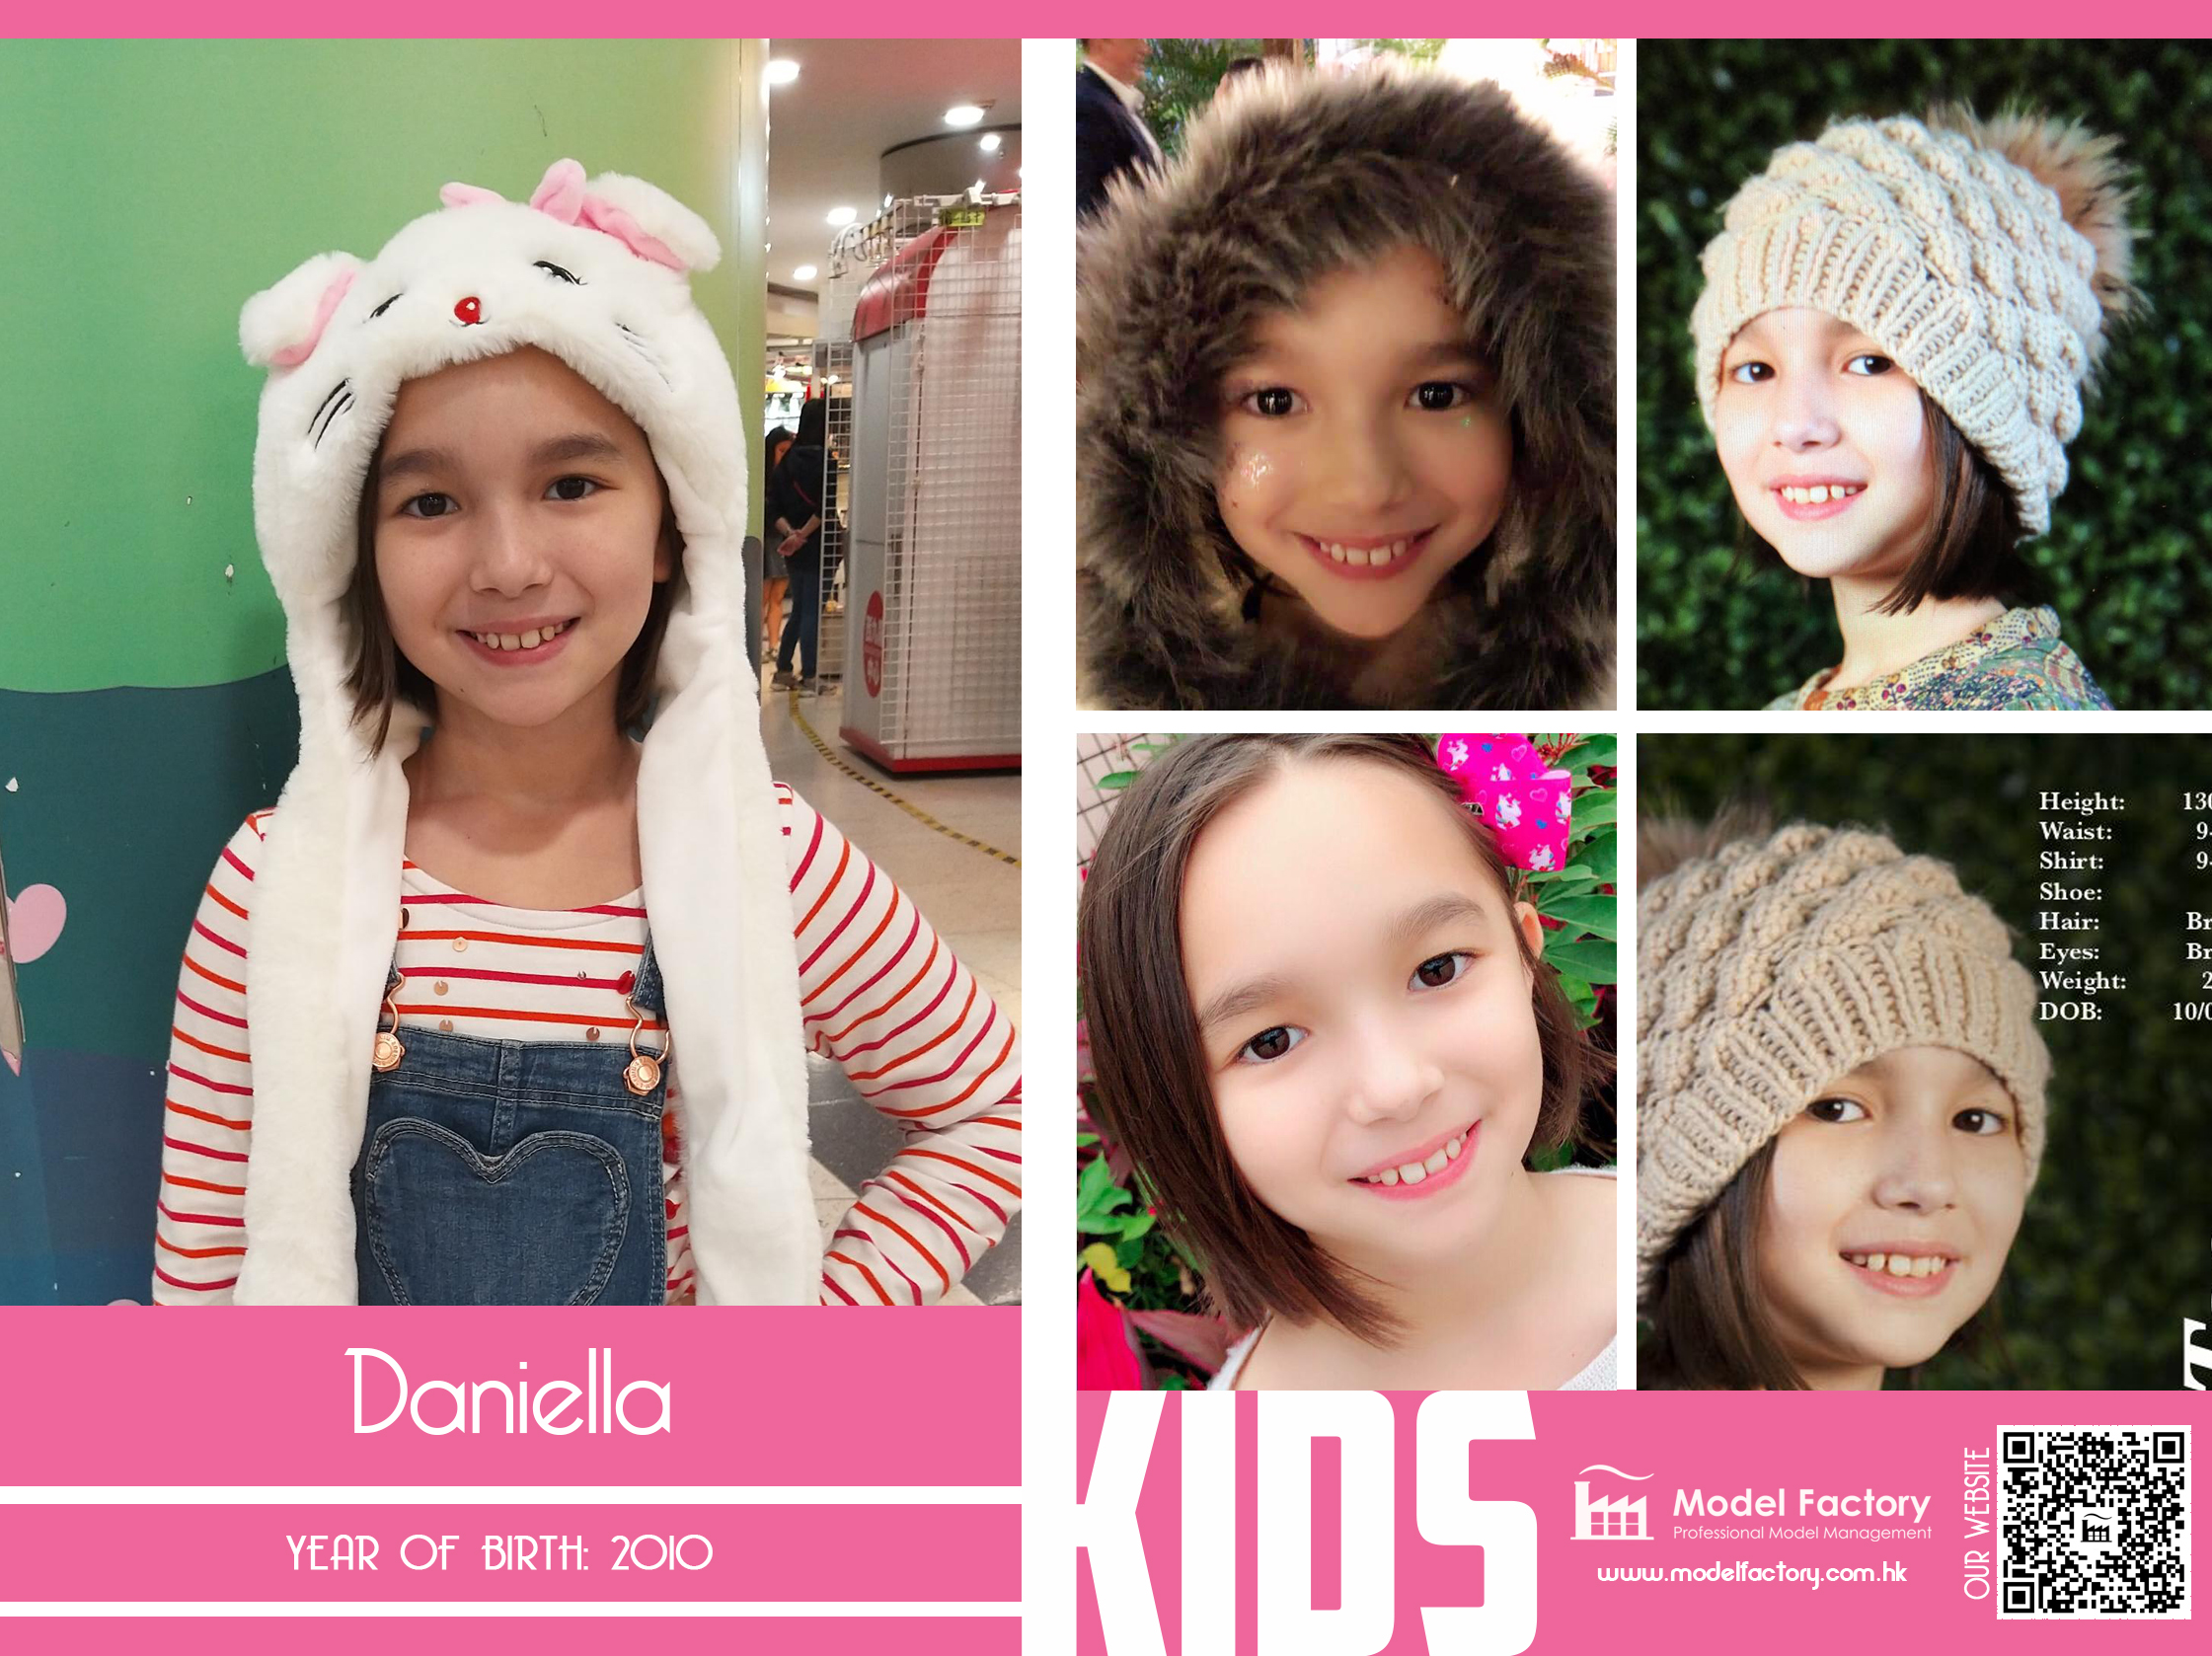 Model Factory Mix Kids Model Daniella